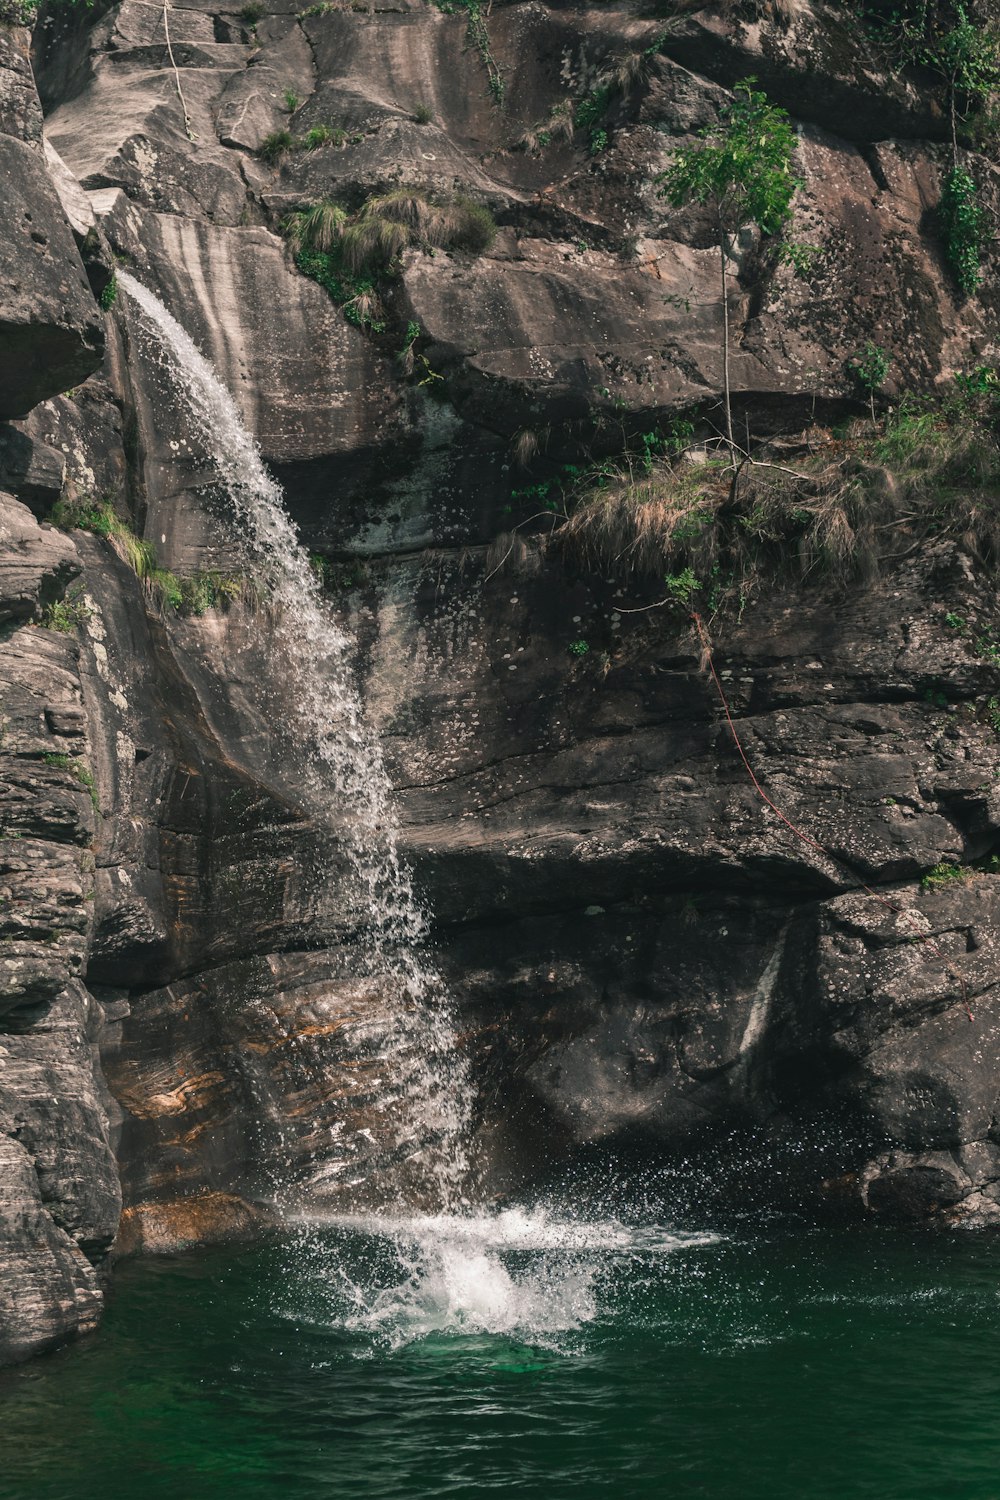 water falls in rocky mountain